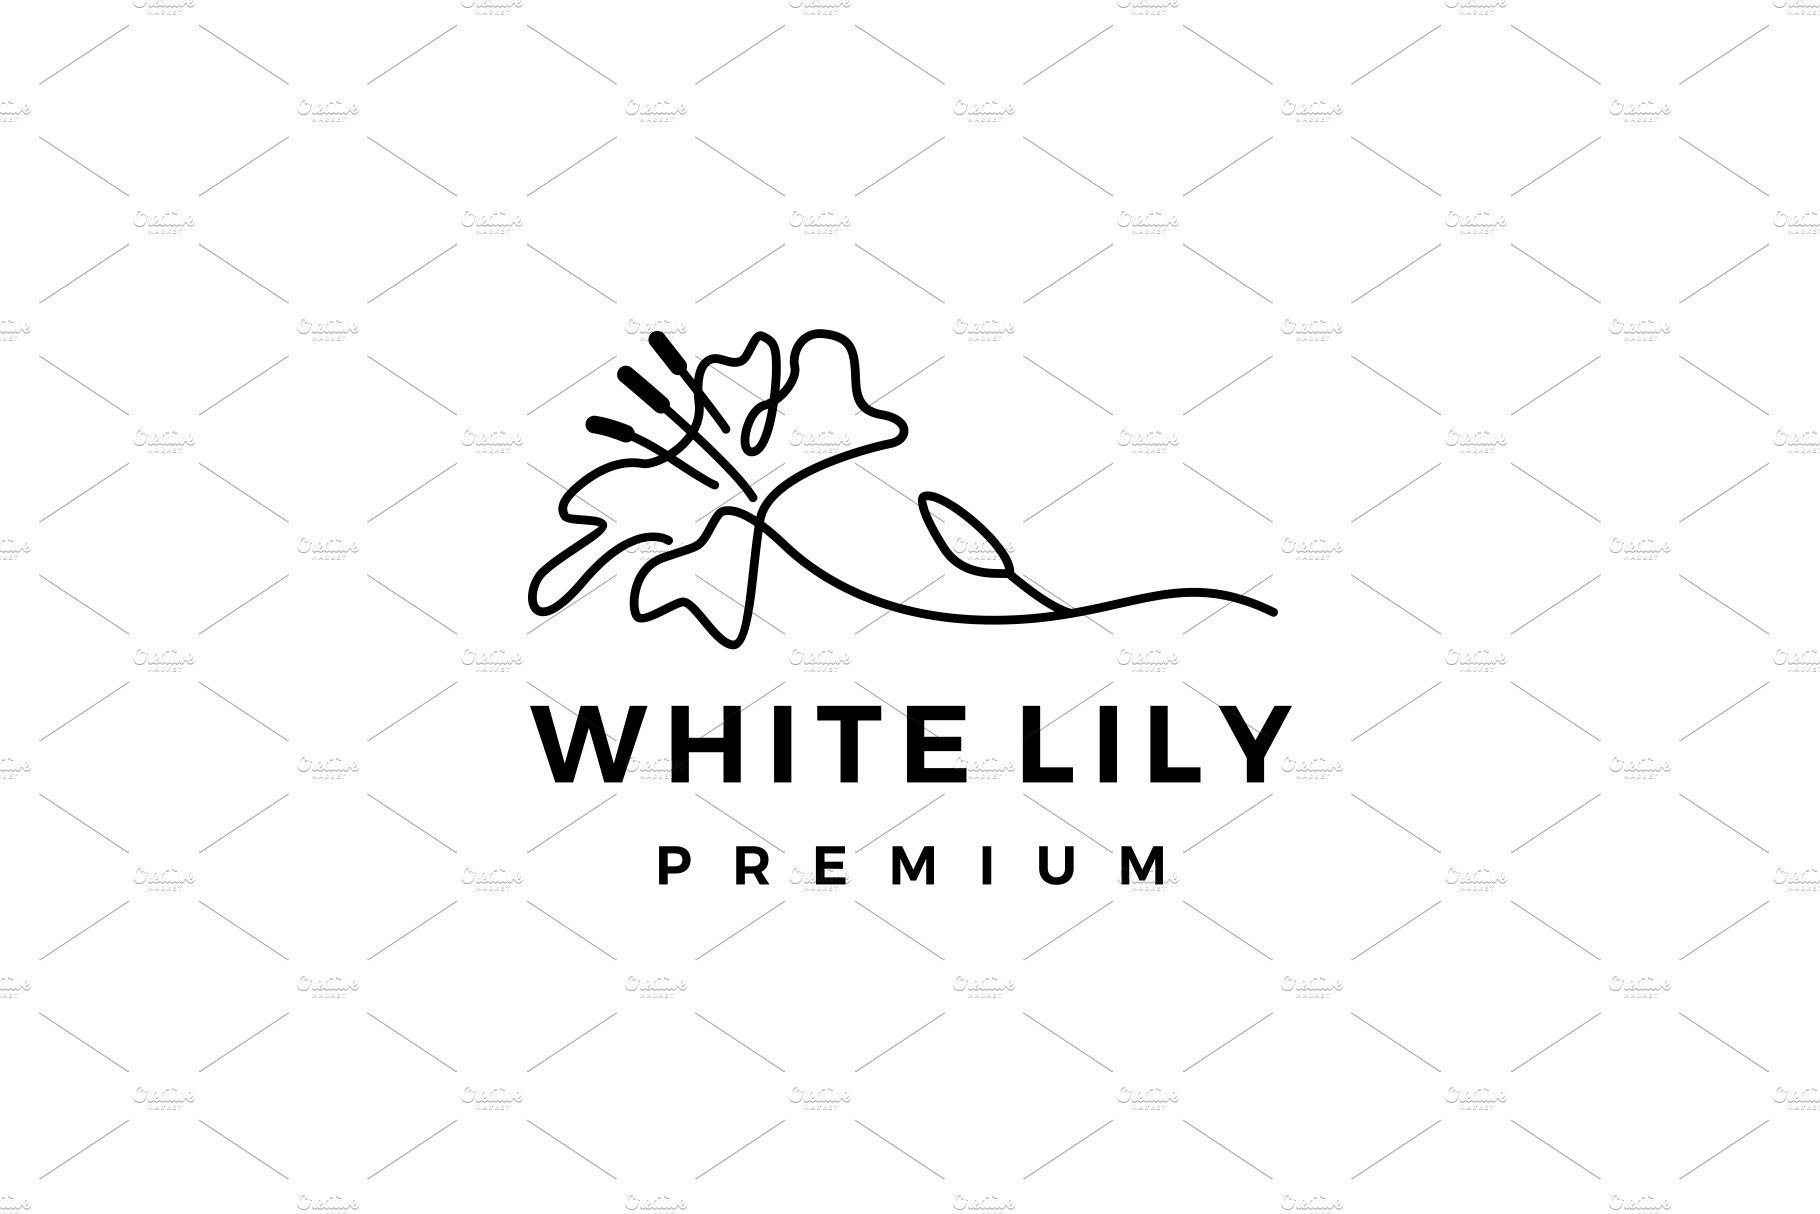 white lily continuous line monoline cover image.